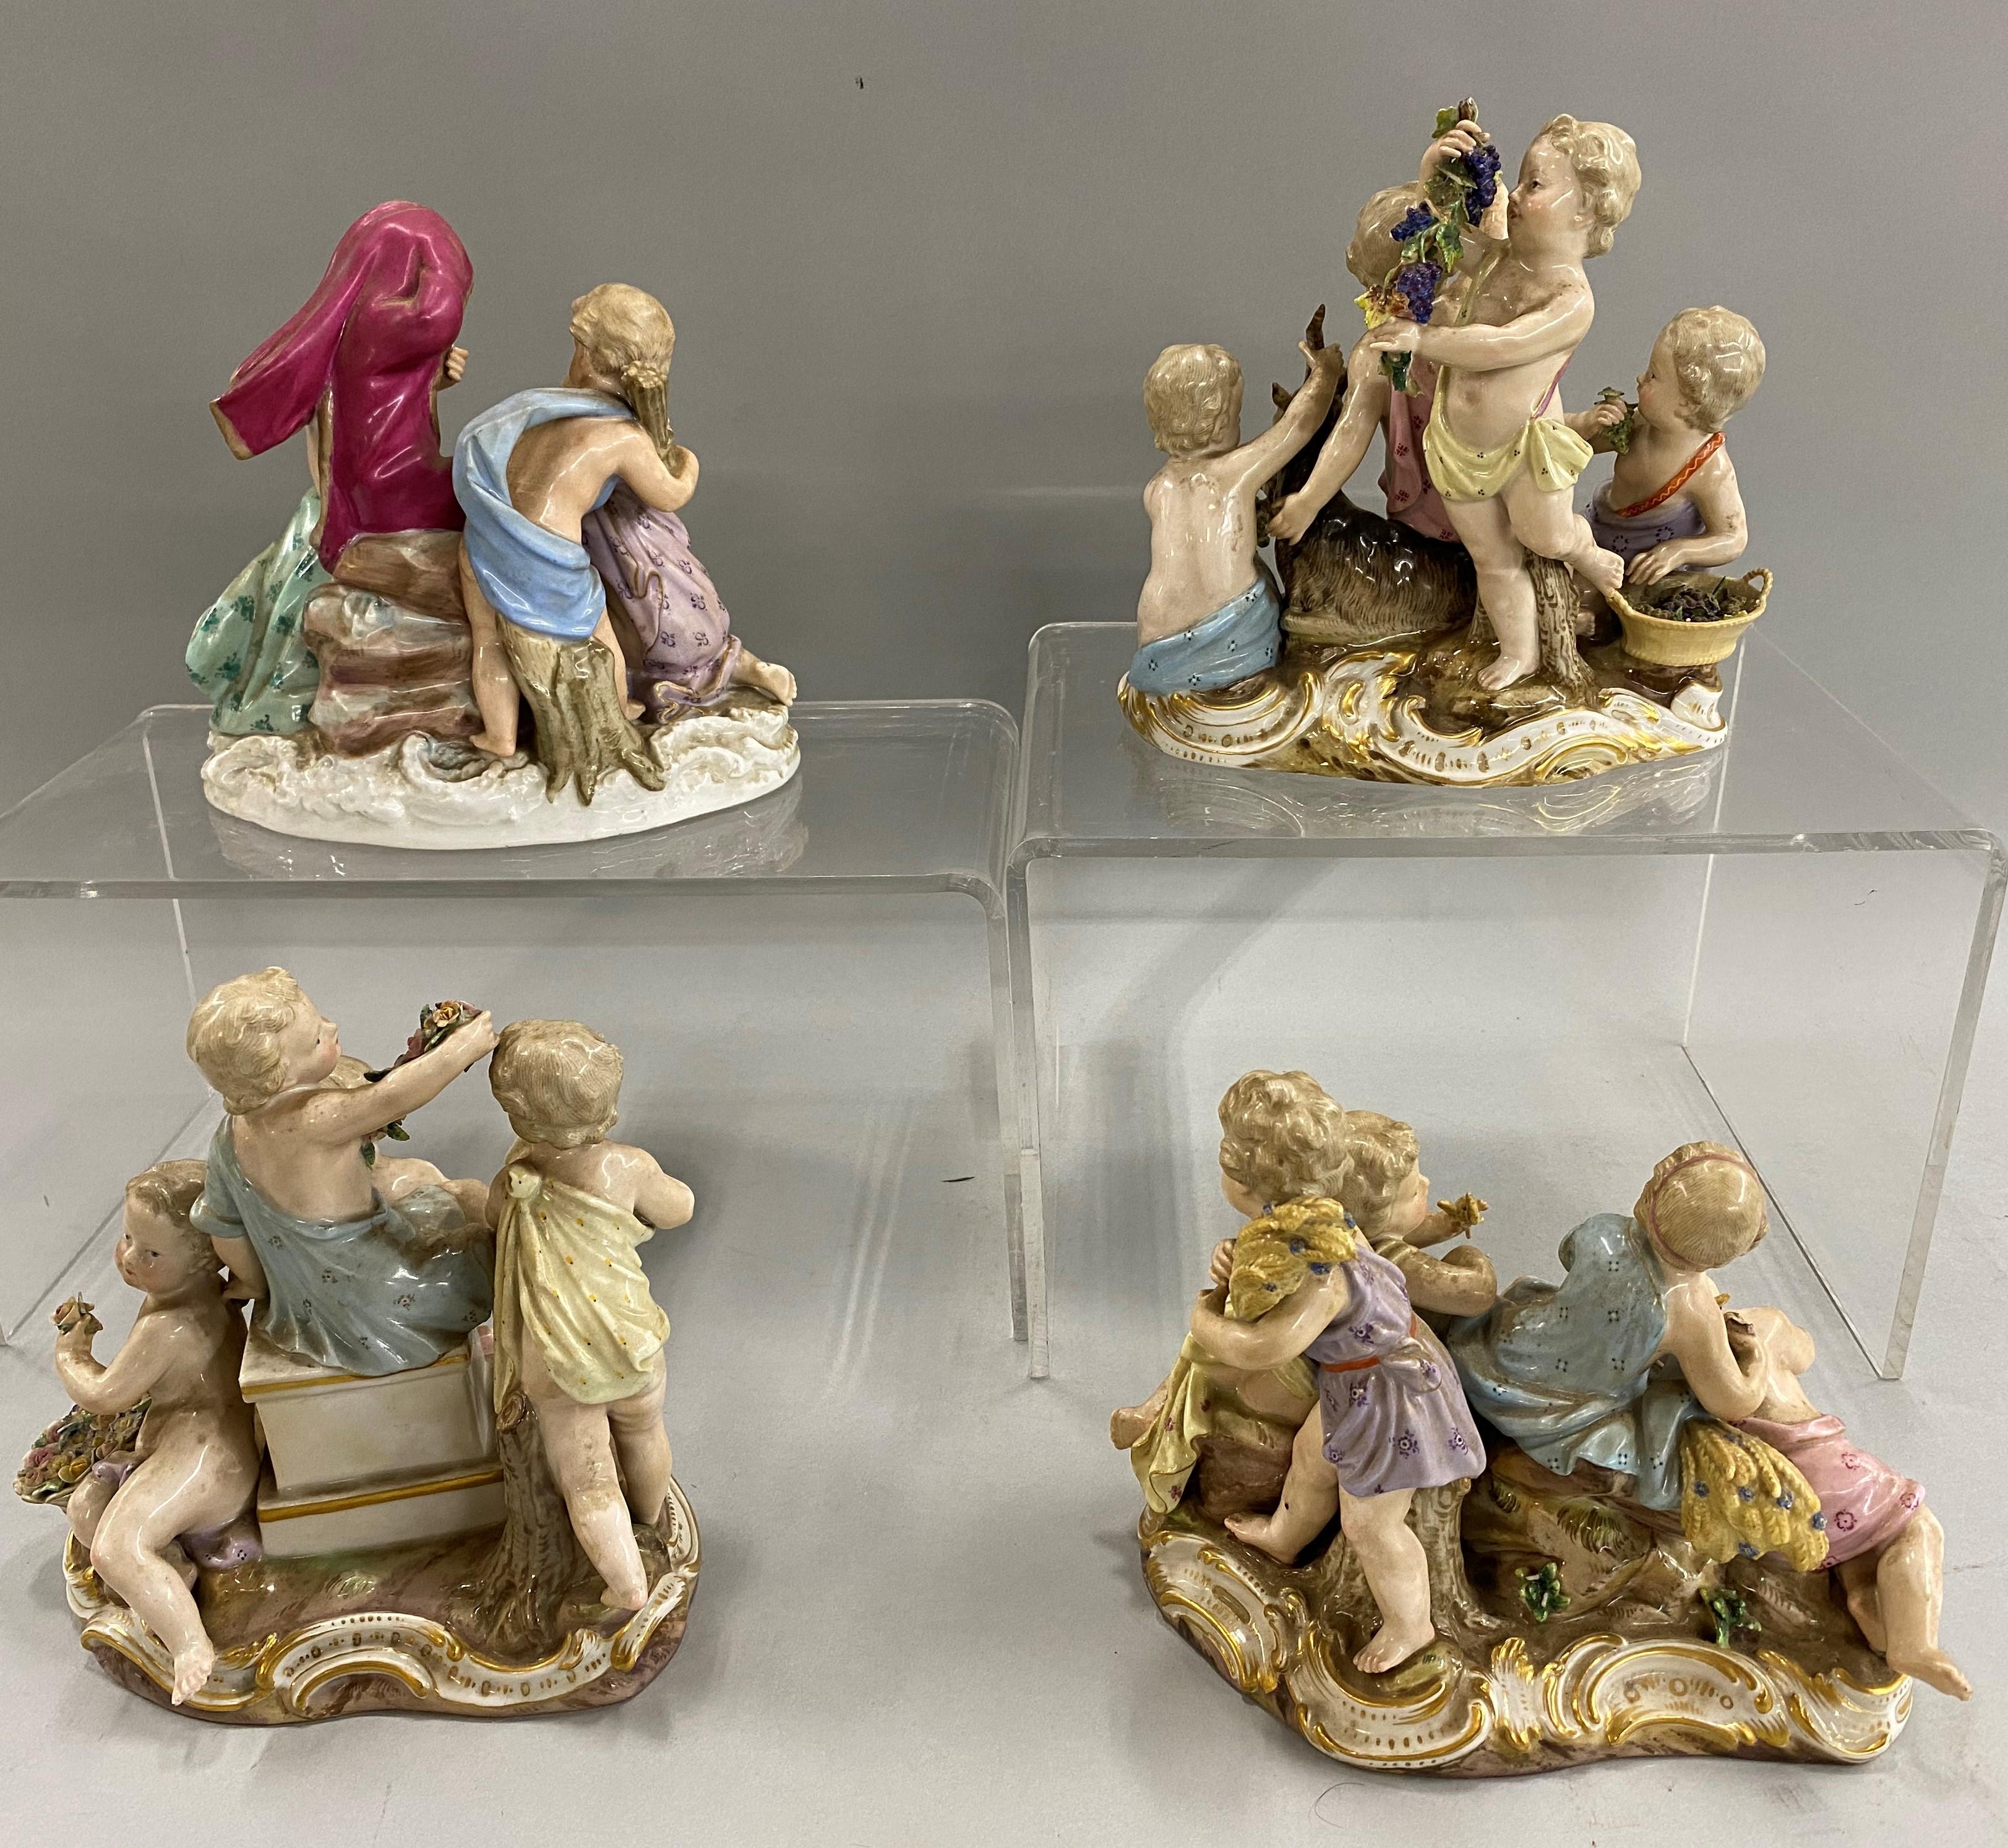 19th Century Meissen “Four Seasons” Set of 4 Porcelain Cherub Figurines, Kaendler circa 1850s